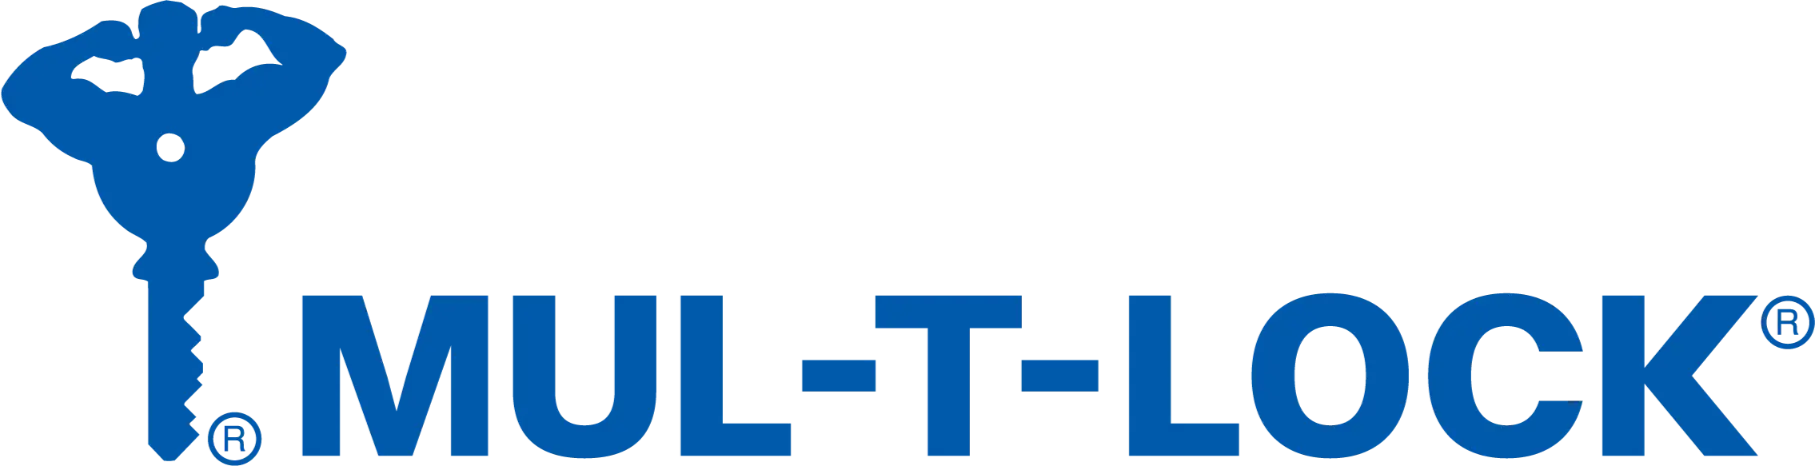 mtl-logo-horizontal